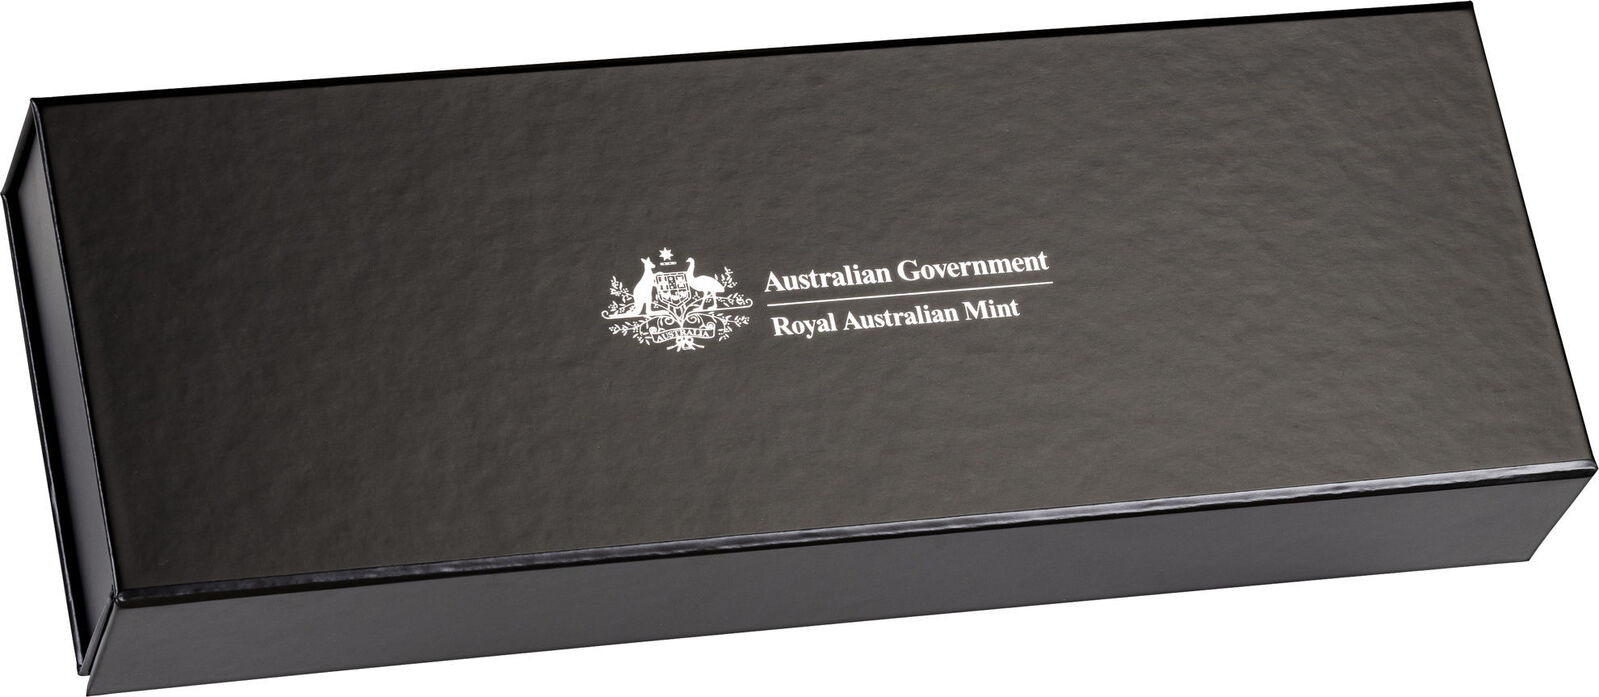 Display Box for 3 x Royal Australian Mint Silver Coins